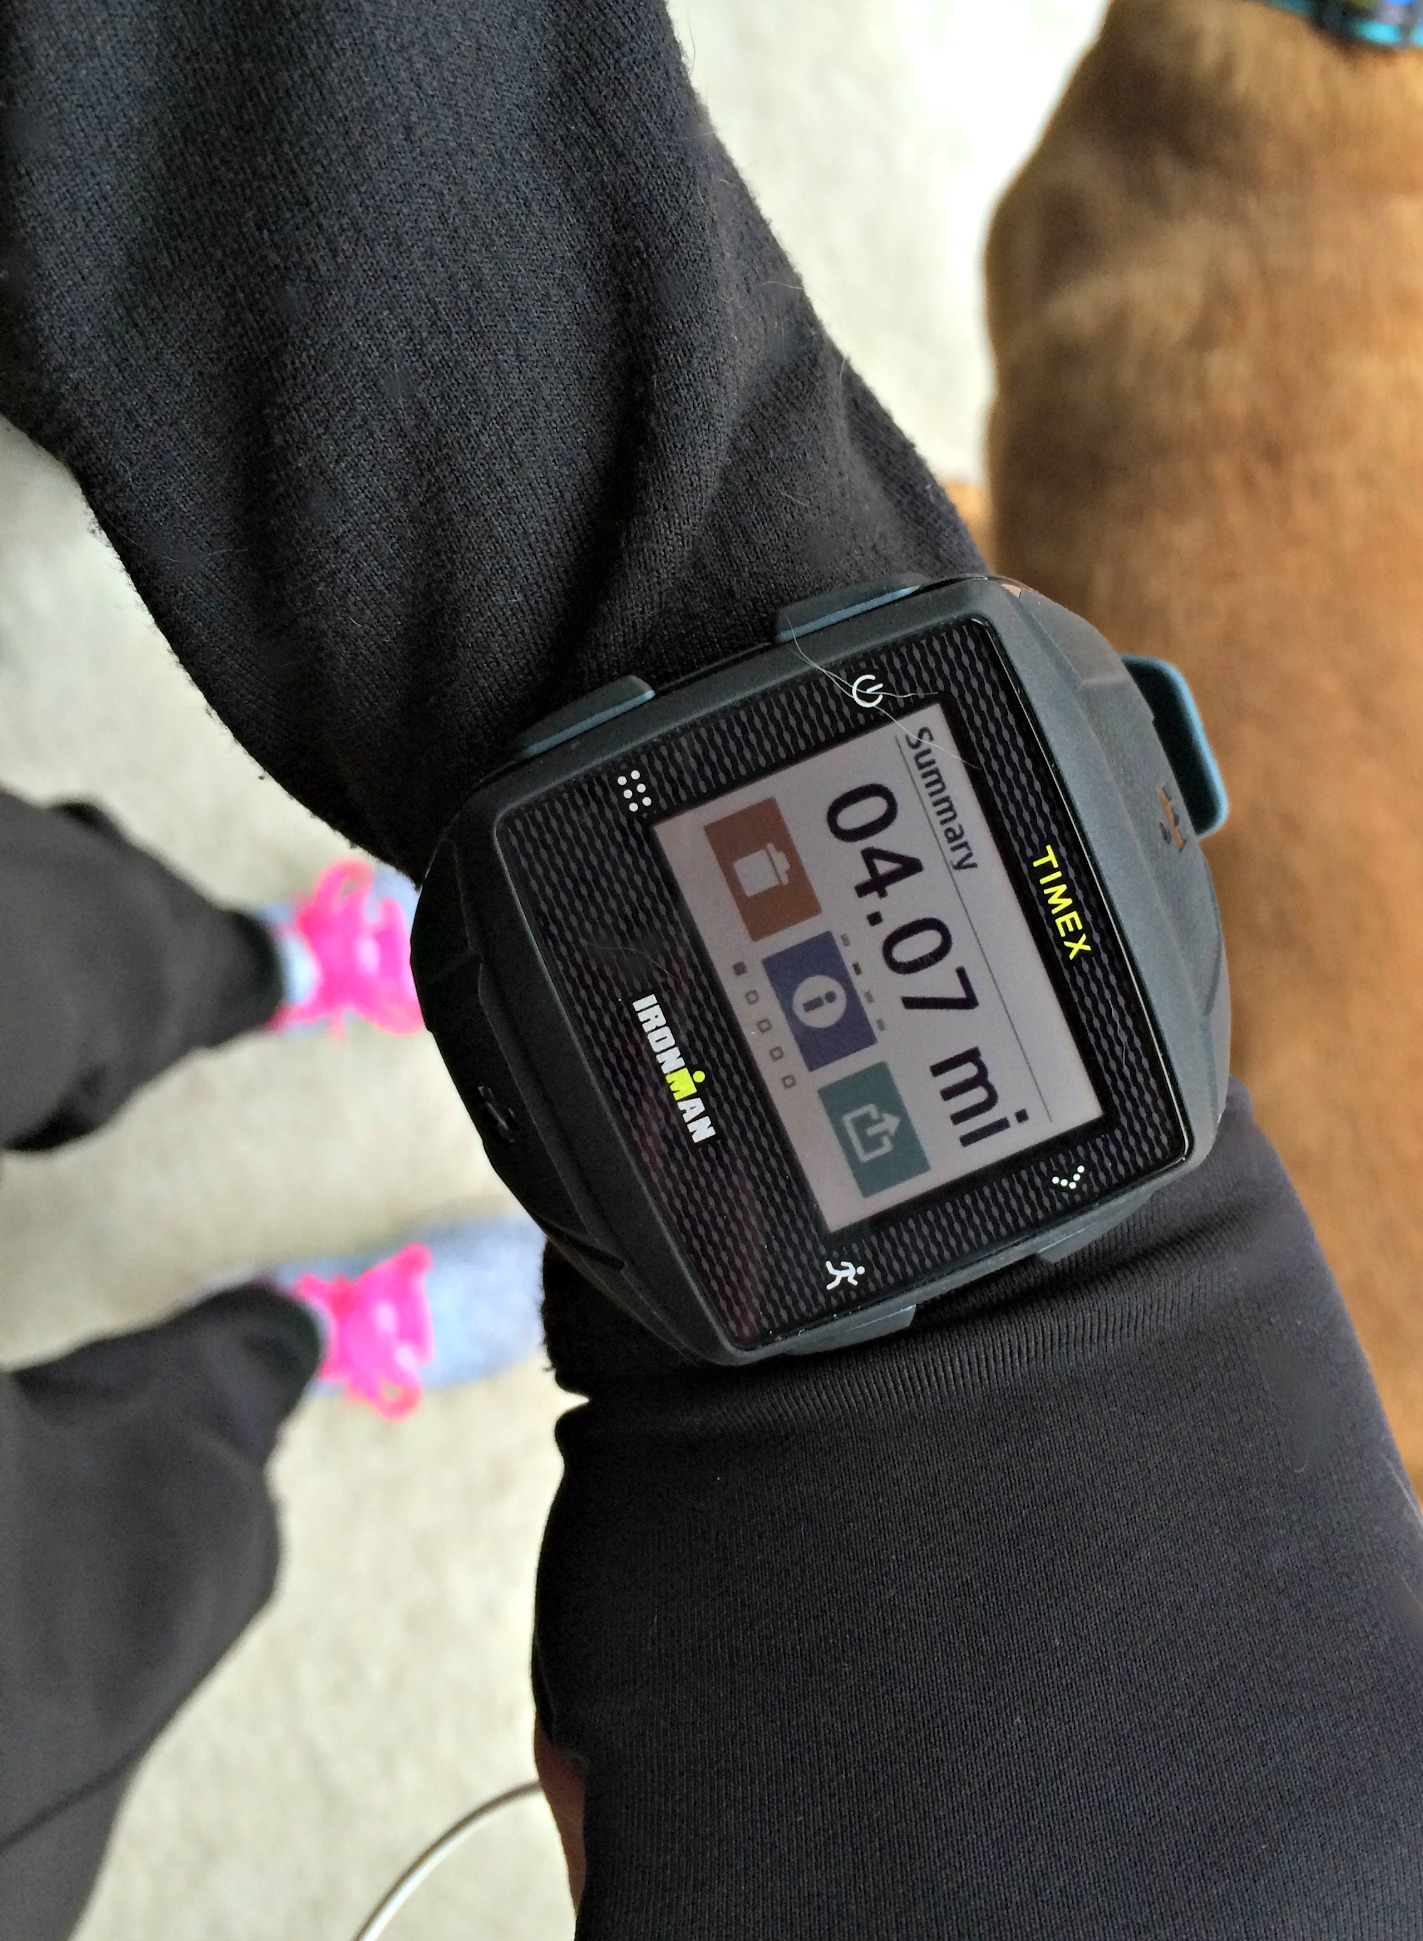 timex GPSONE+ watch after a walk